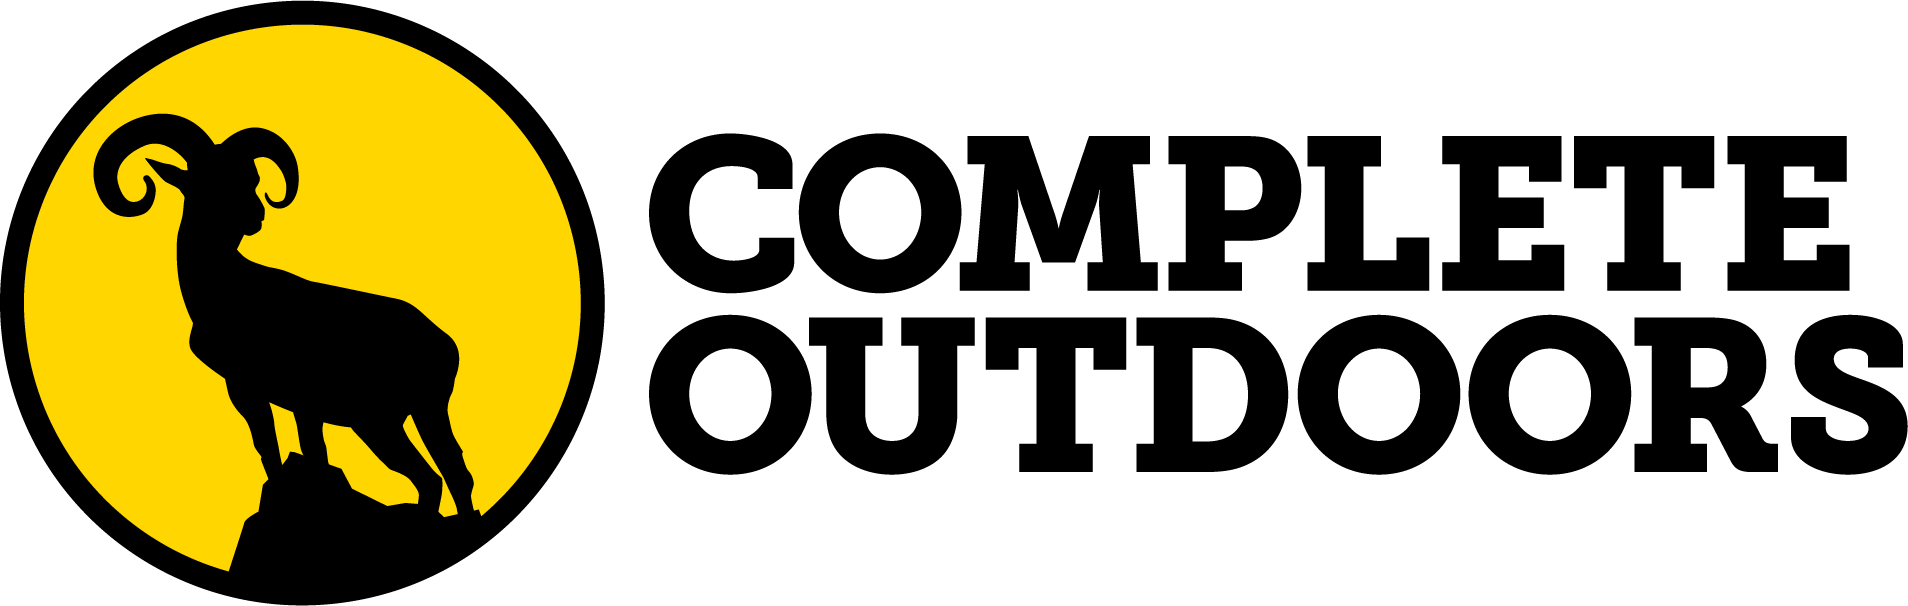 Outdoor Store Logo - Outdoor Shop & Camping Gear Store